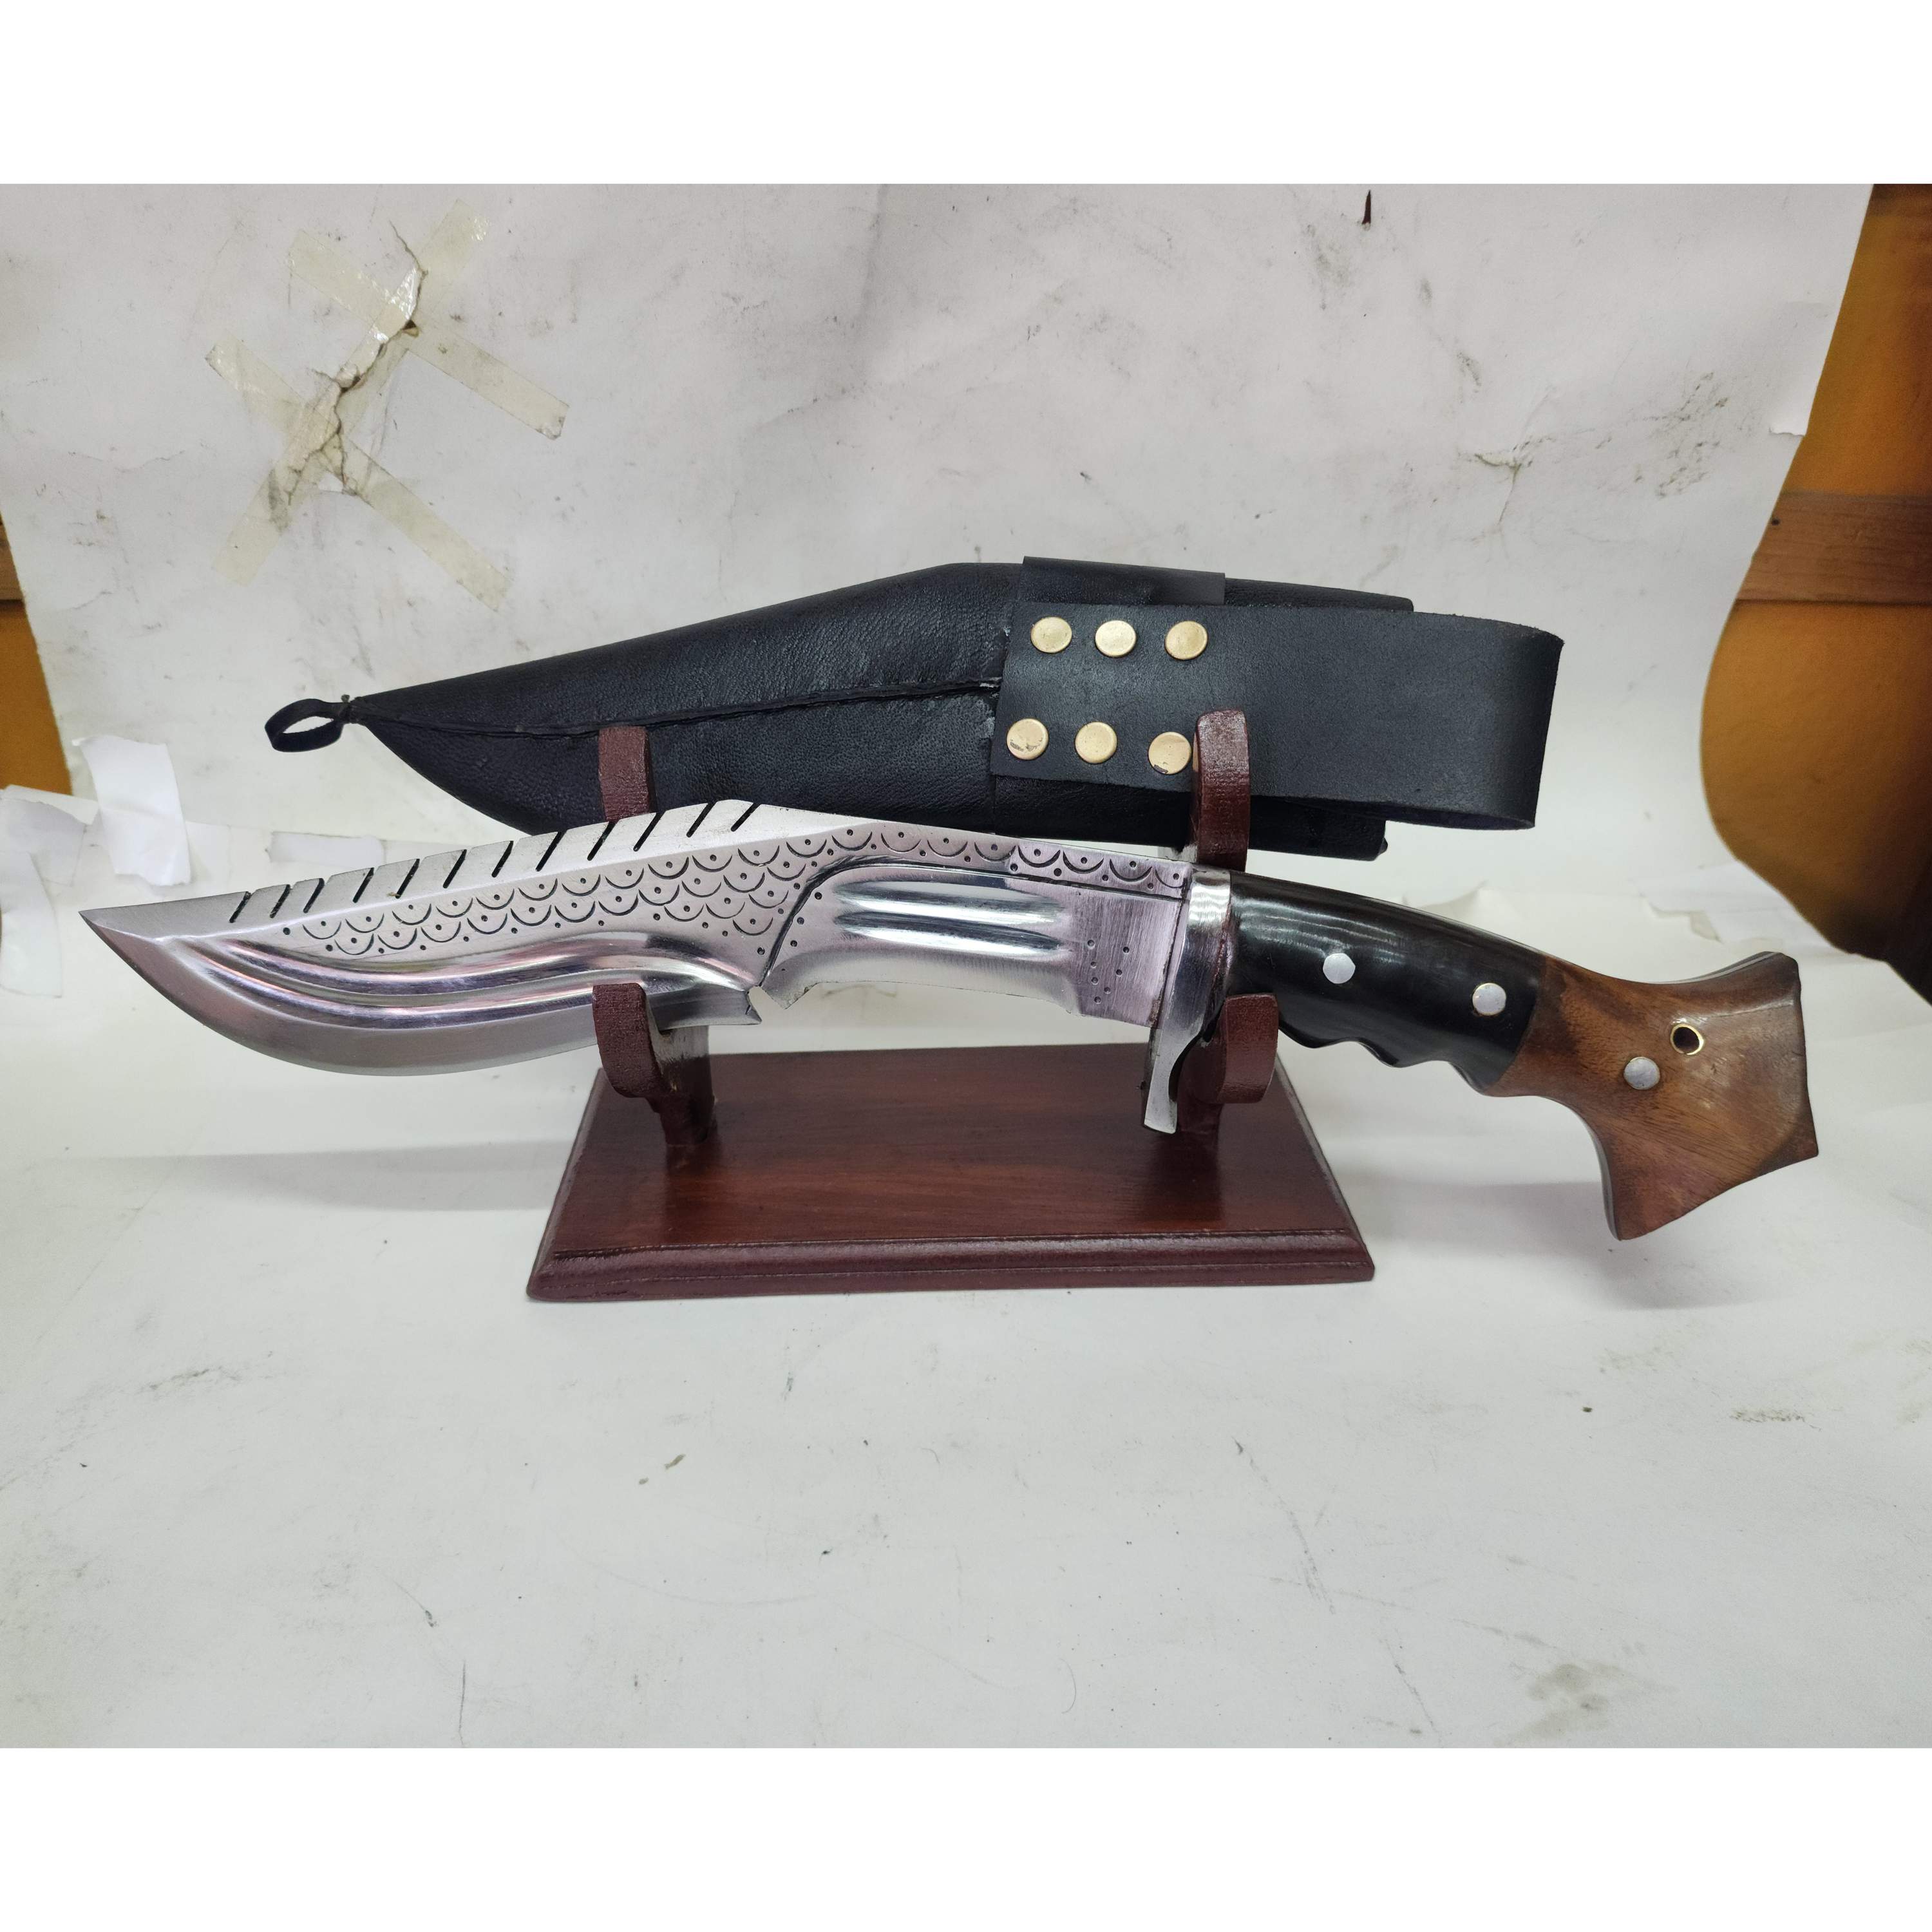 10 Inch, khukuri, Gurkha Knife With Leather Cover And Stand, Nepali Machete, double Dragon Design